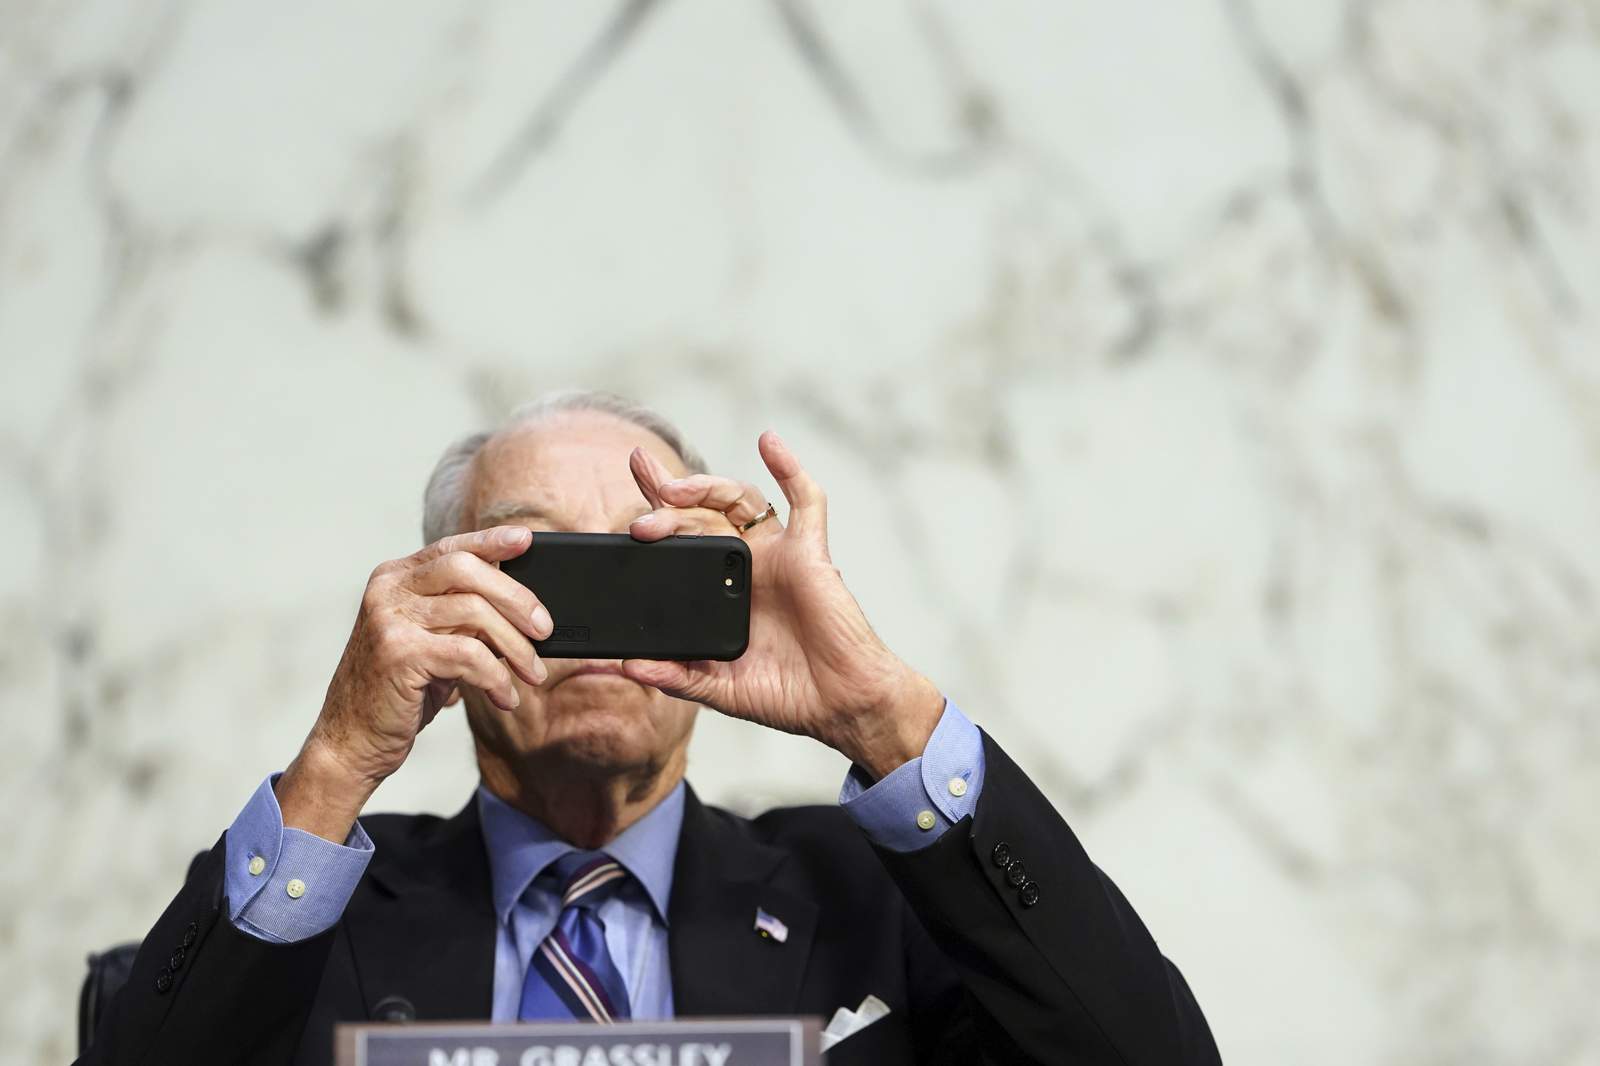 Report: Social media manipulation affects even US senators